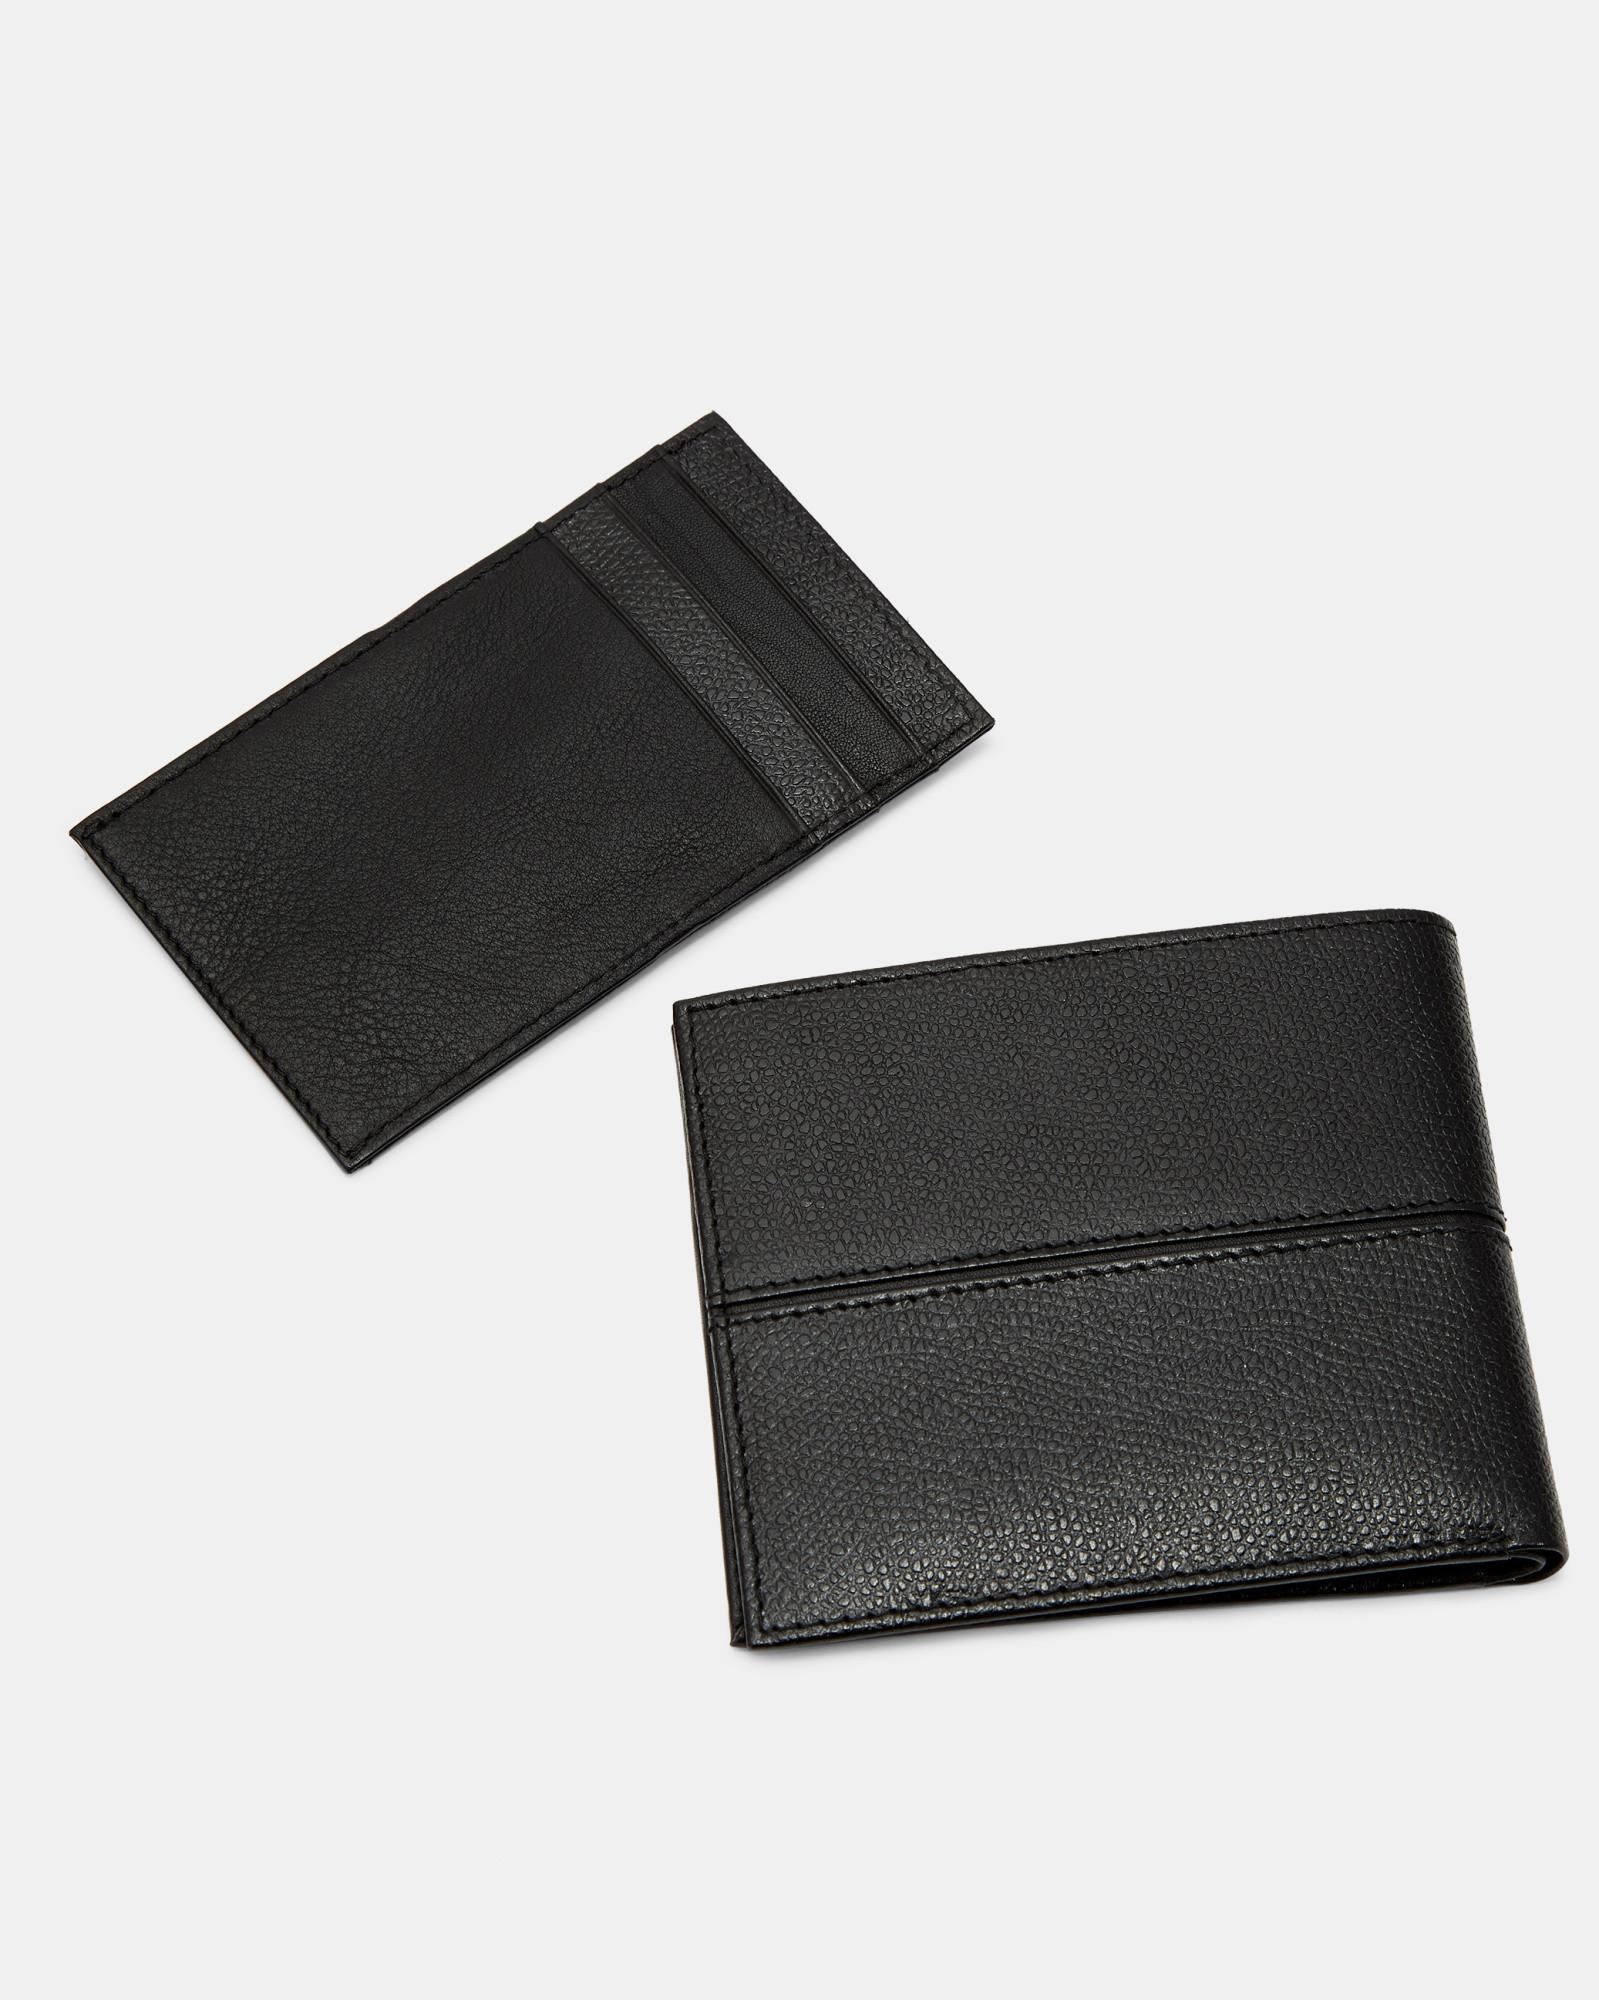 Ted Baker Leather Wallet And Card Holder Gift Set in Black for Men - Lyst